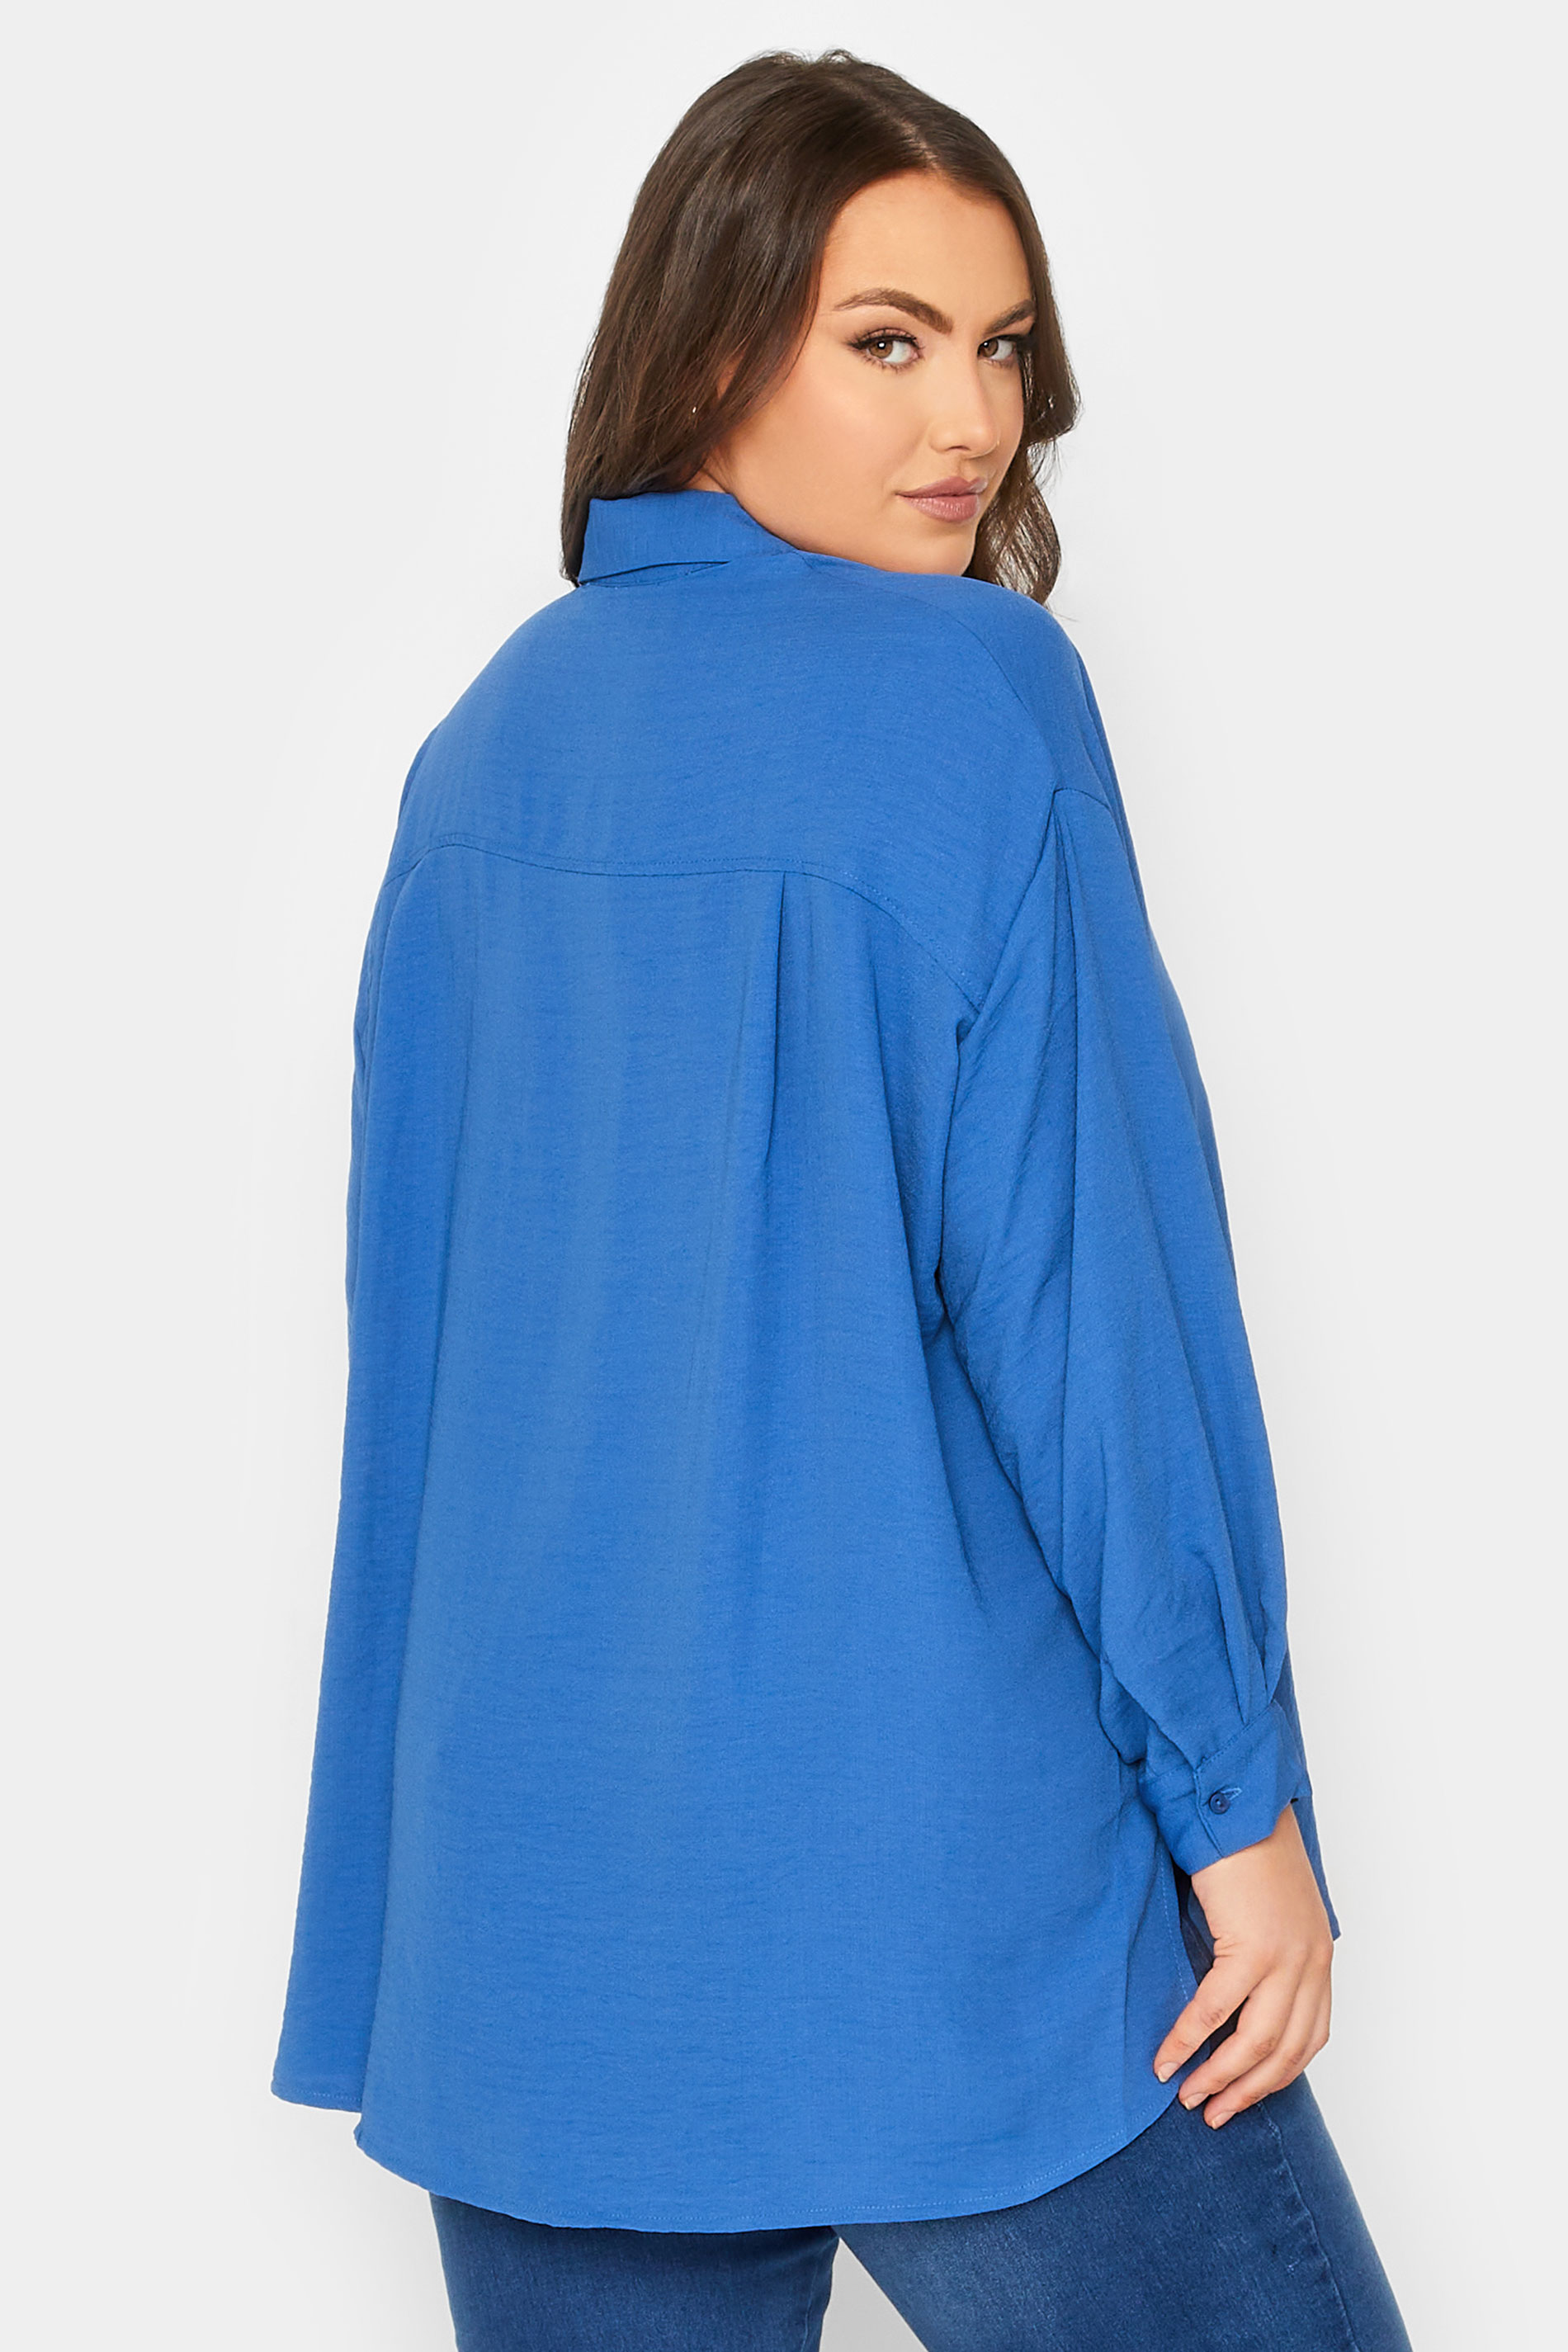 YOURS LONDON Plus Size Cobalt Blue Oversized Satin Shirt | Yours Clothing 3